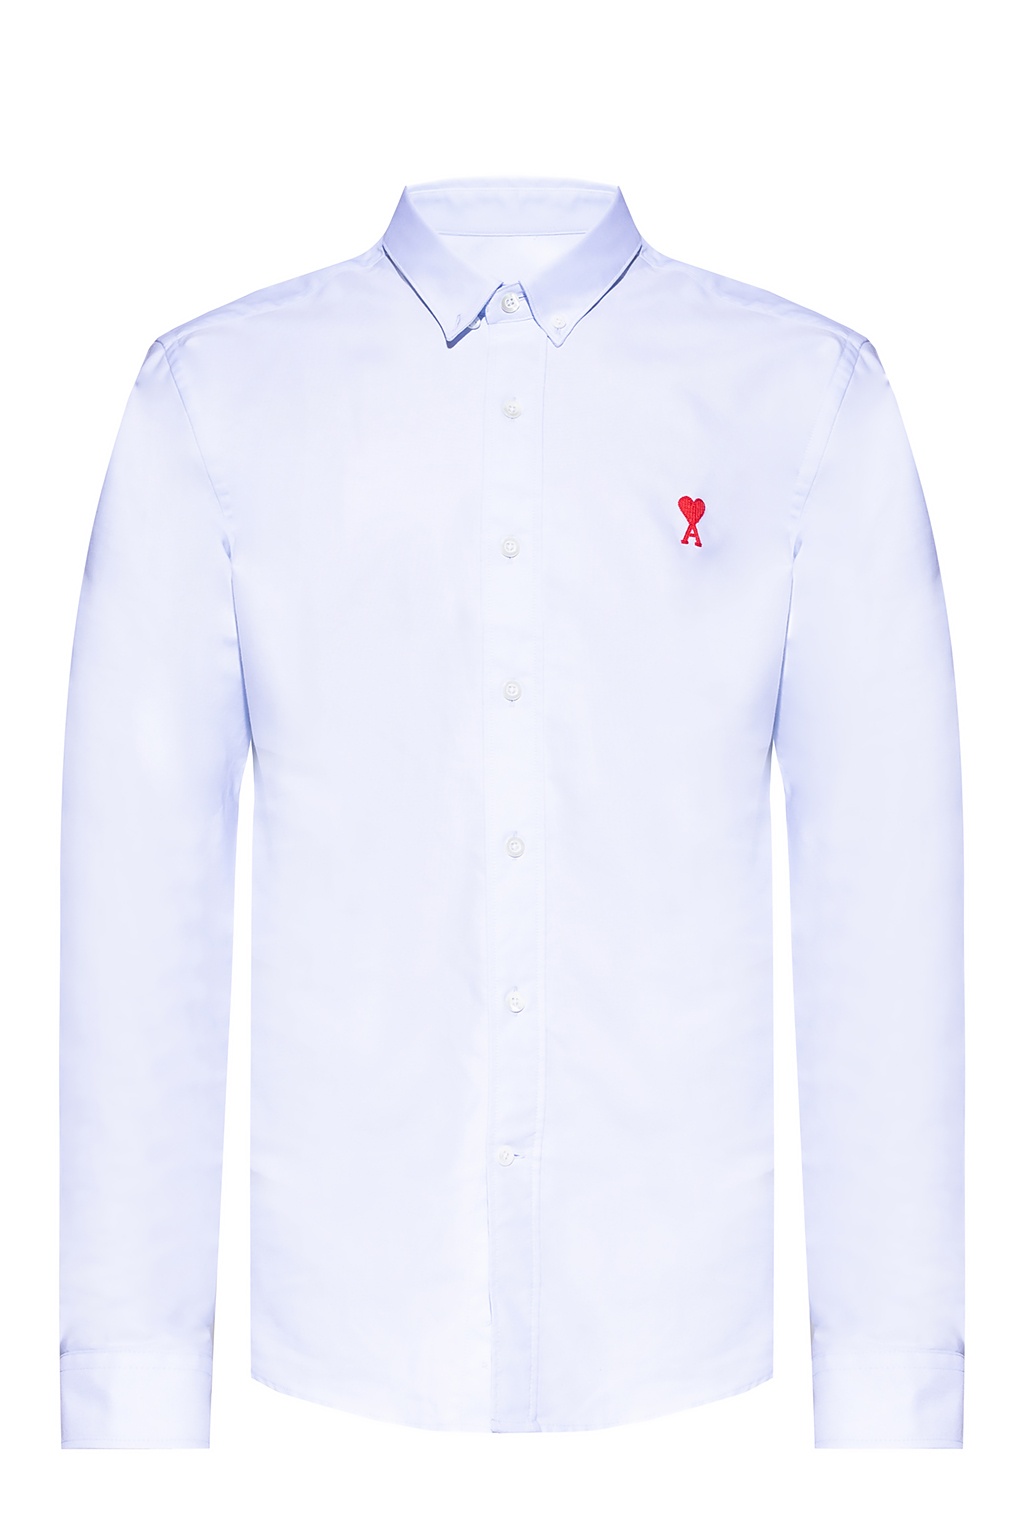 Ami Alexandre Mattiussi Shirt with logo | Men's Clothing | IetpShops